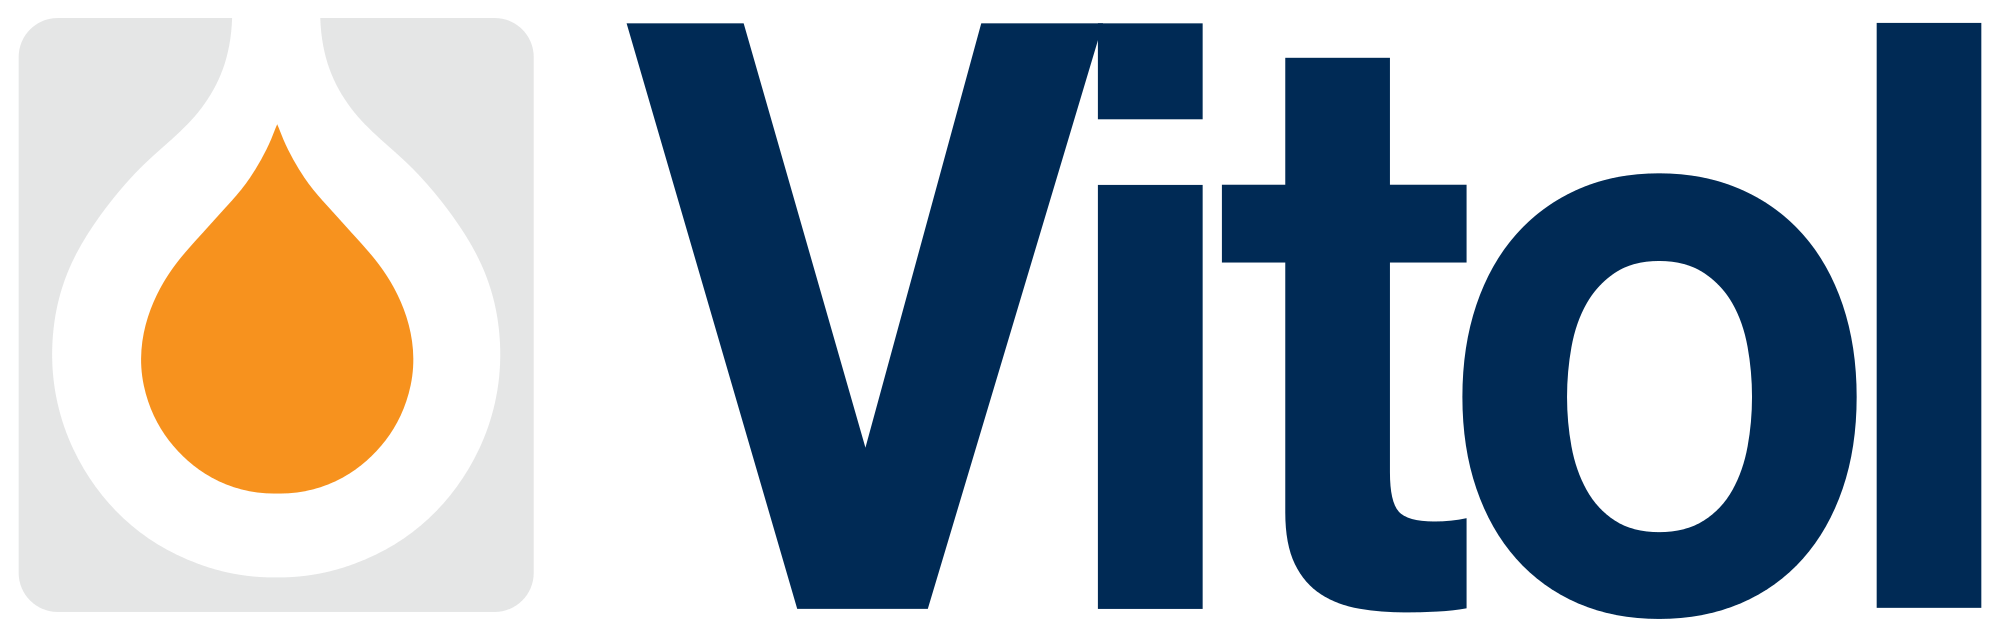 Vitol_logo.svg